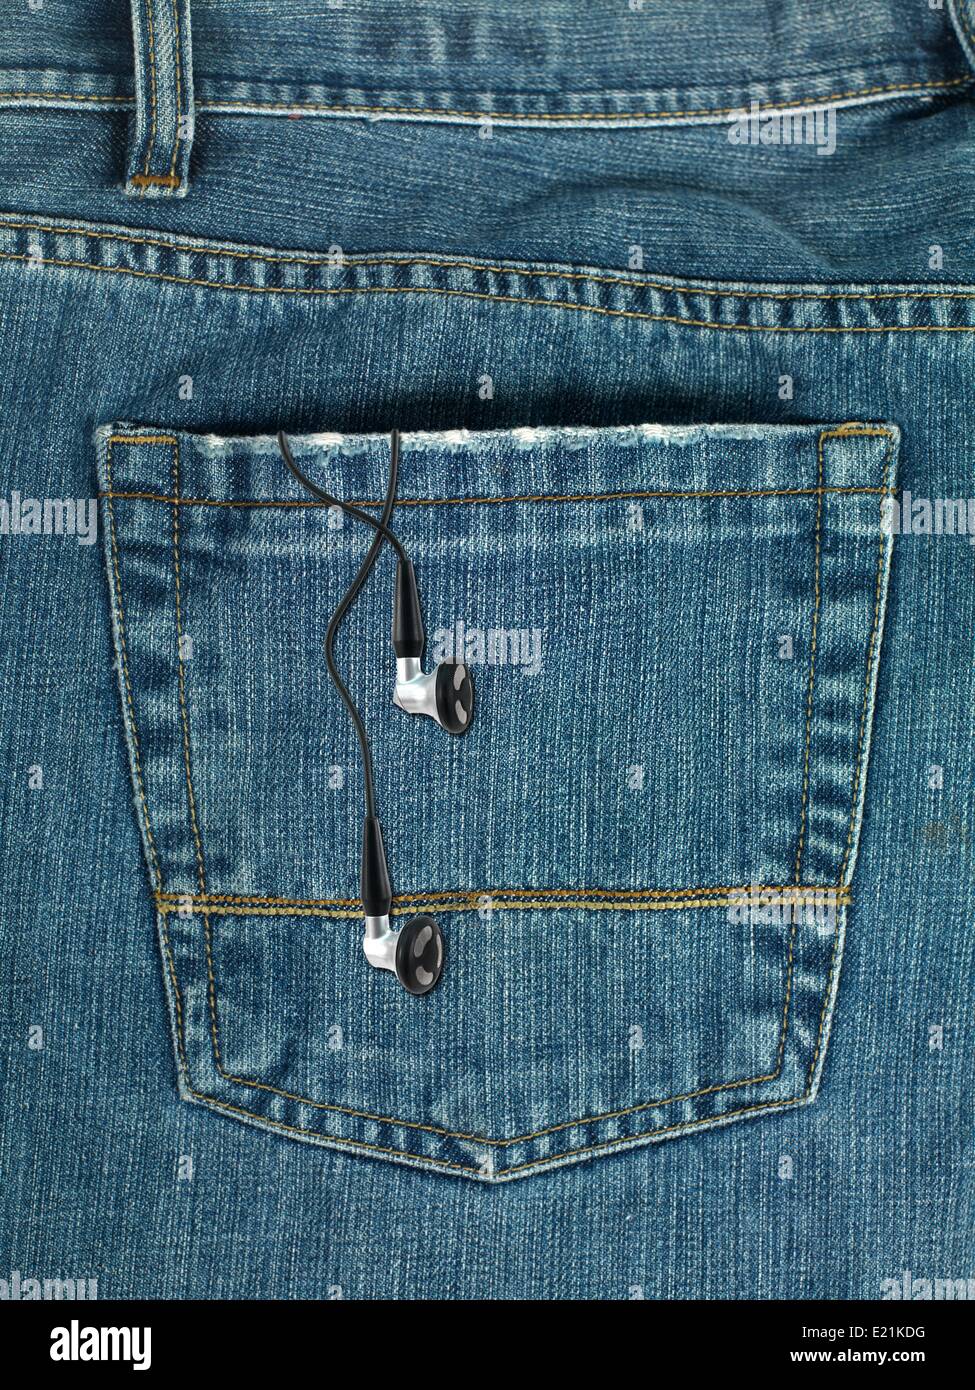 A denium blue jean pocket shot up close Stock Photo